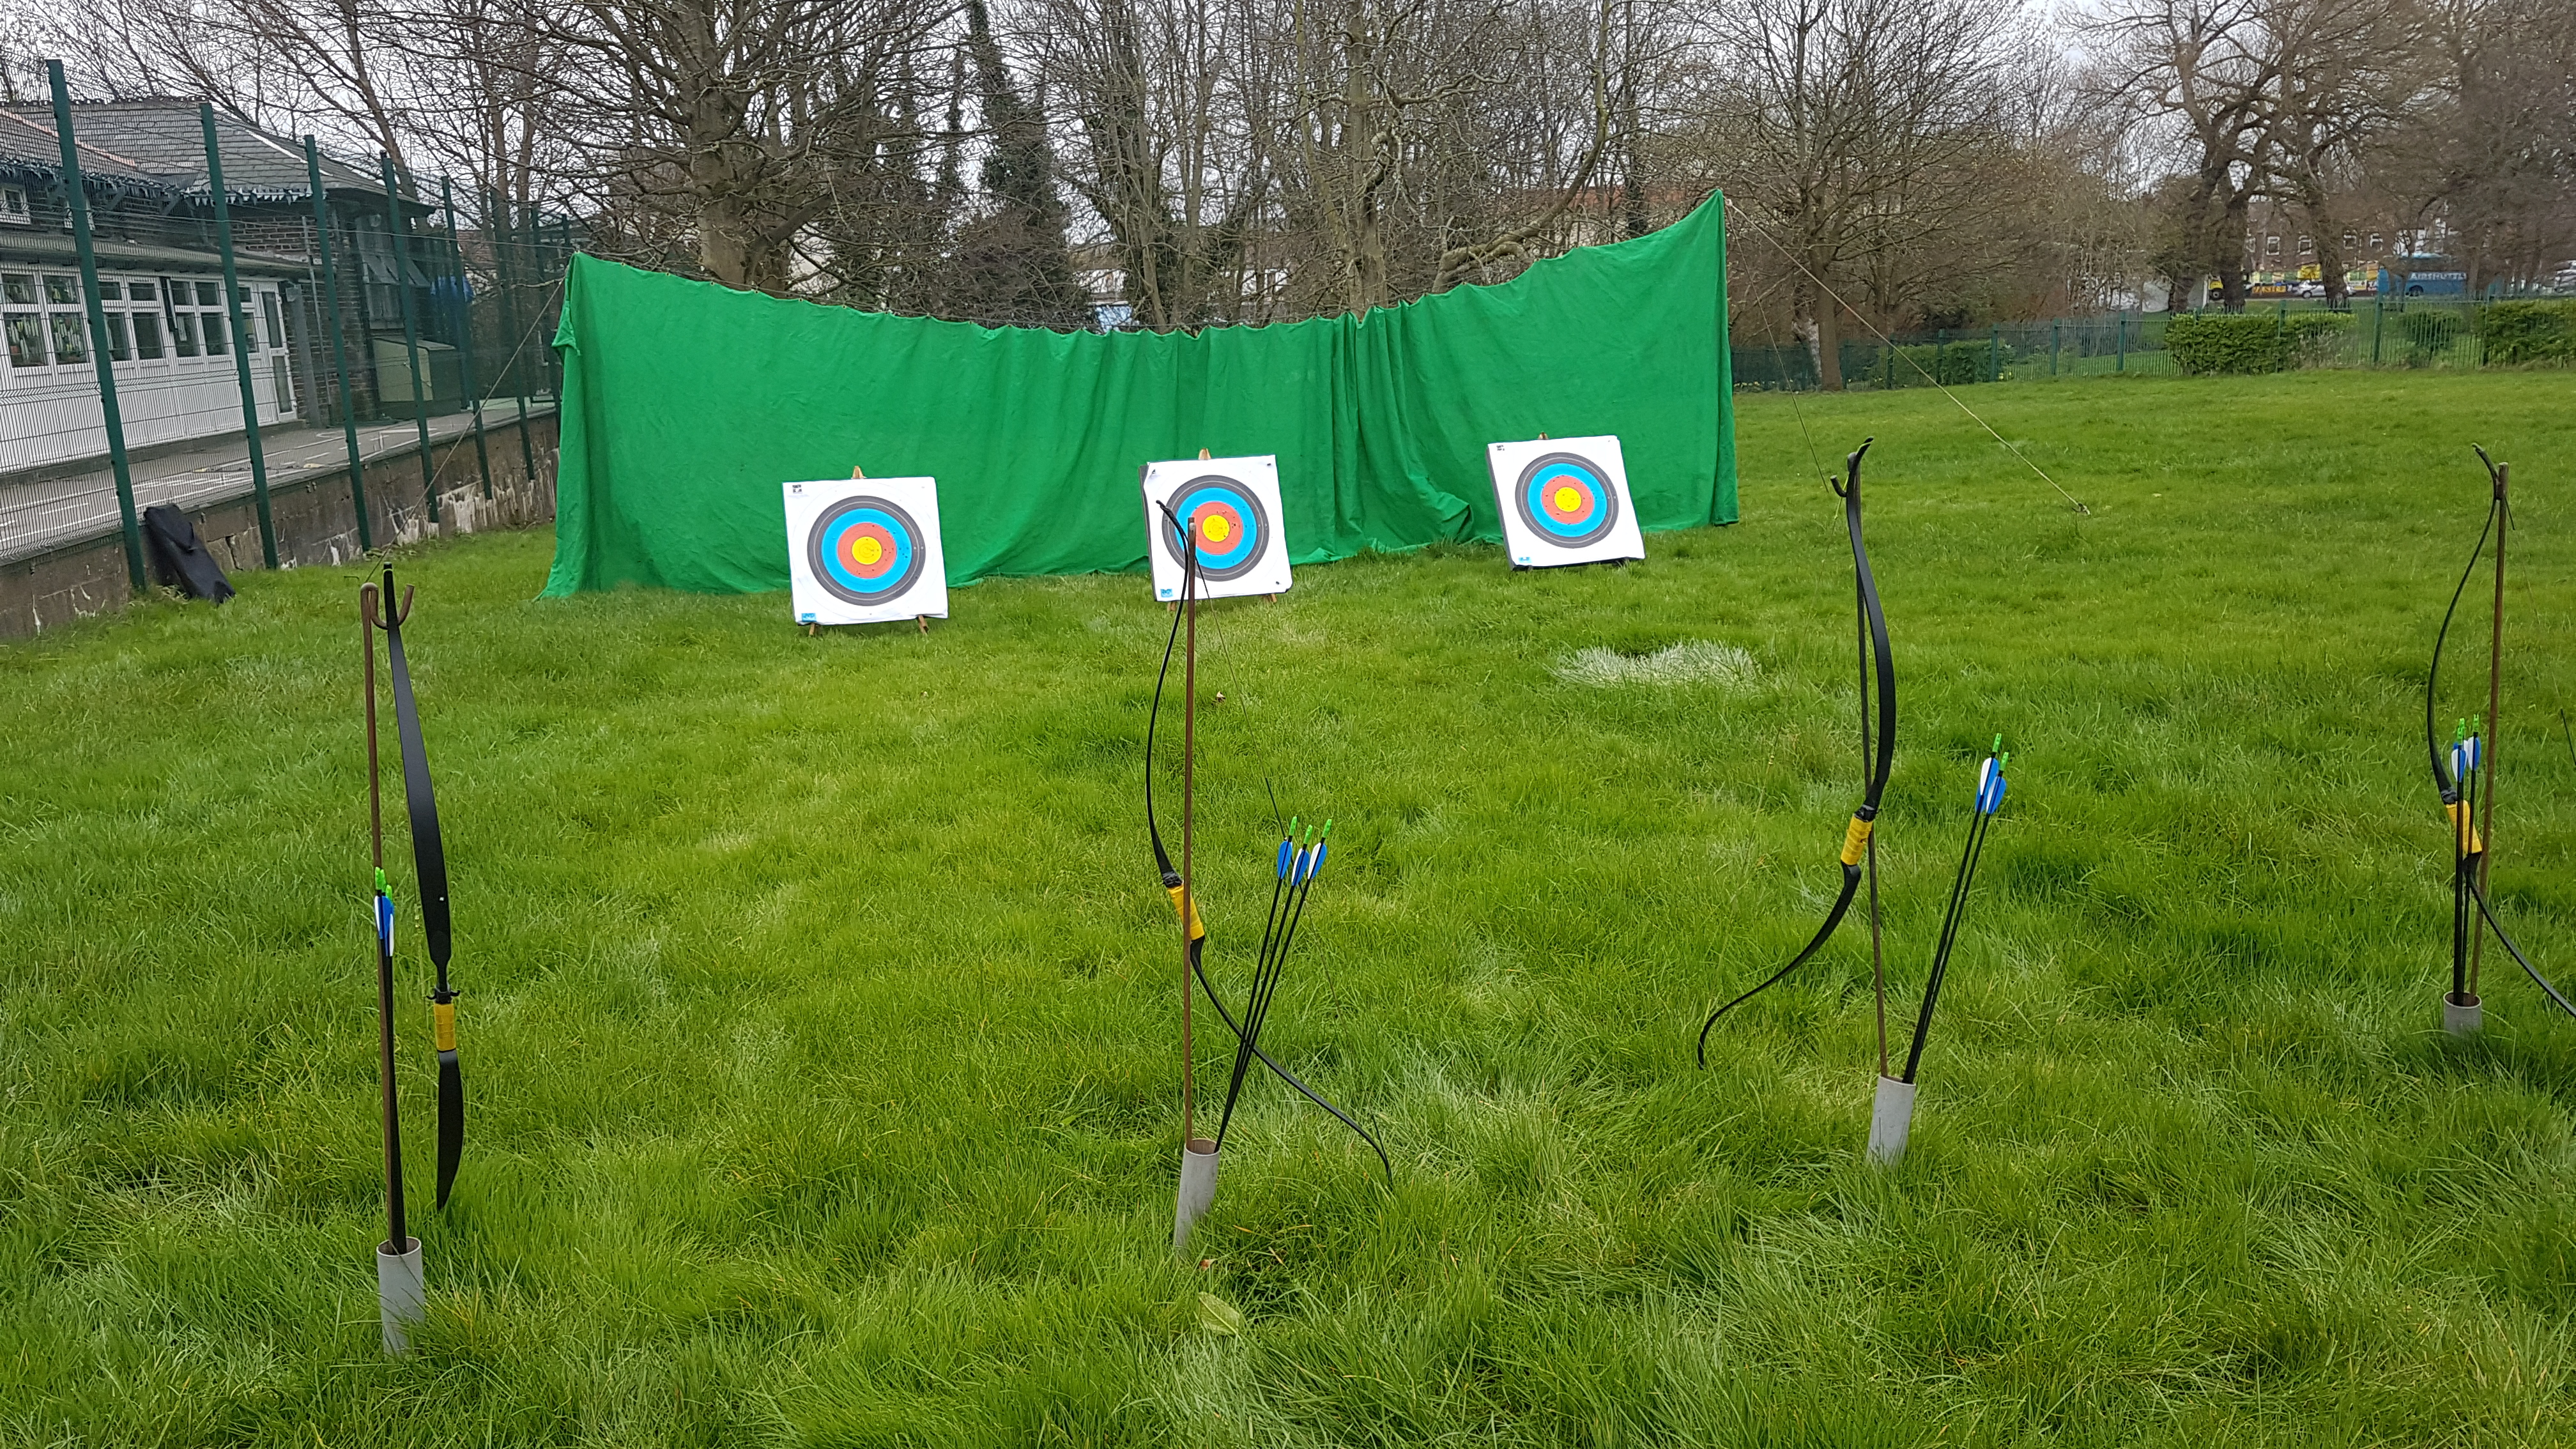 Archery instructor